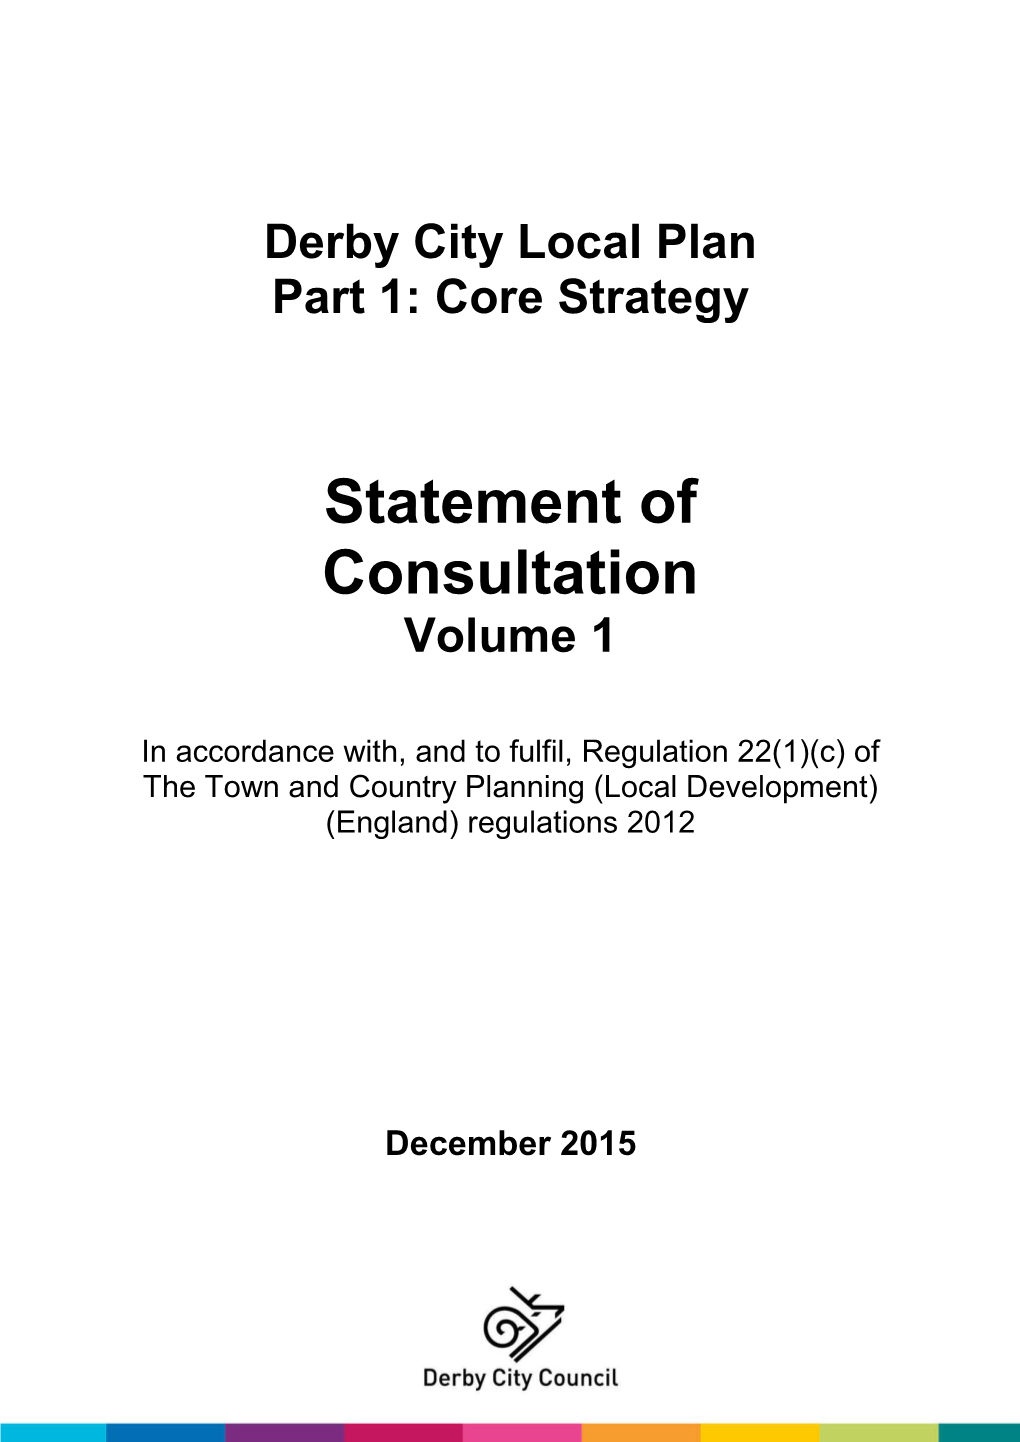 Statement of Consultation Volume 1